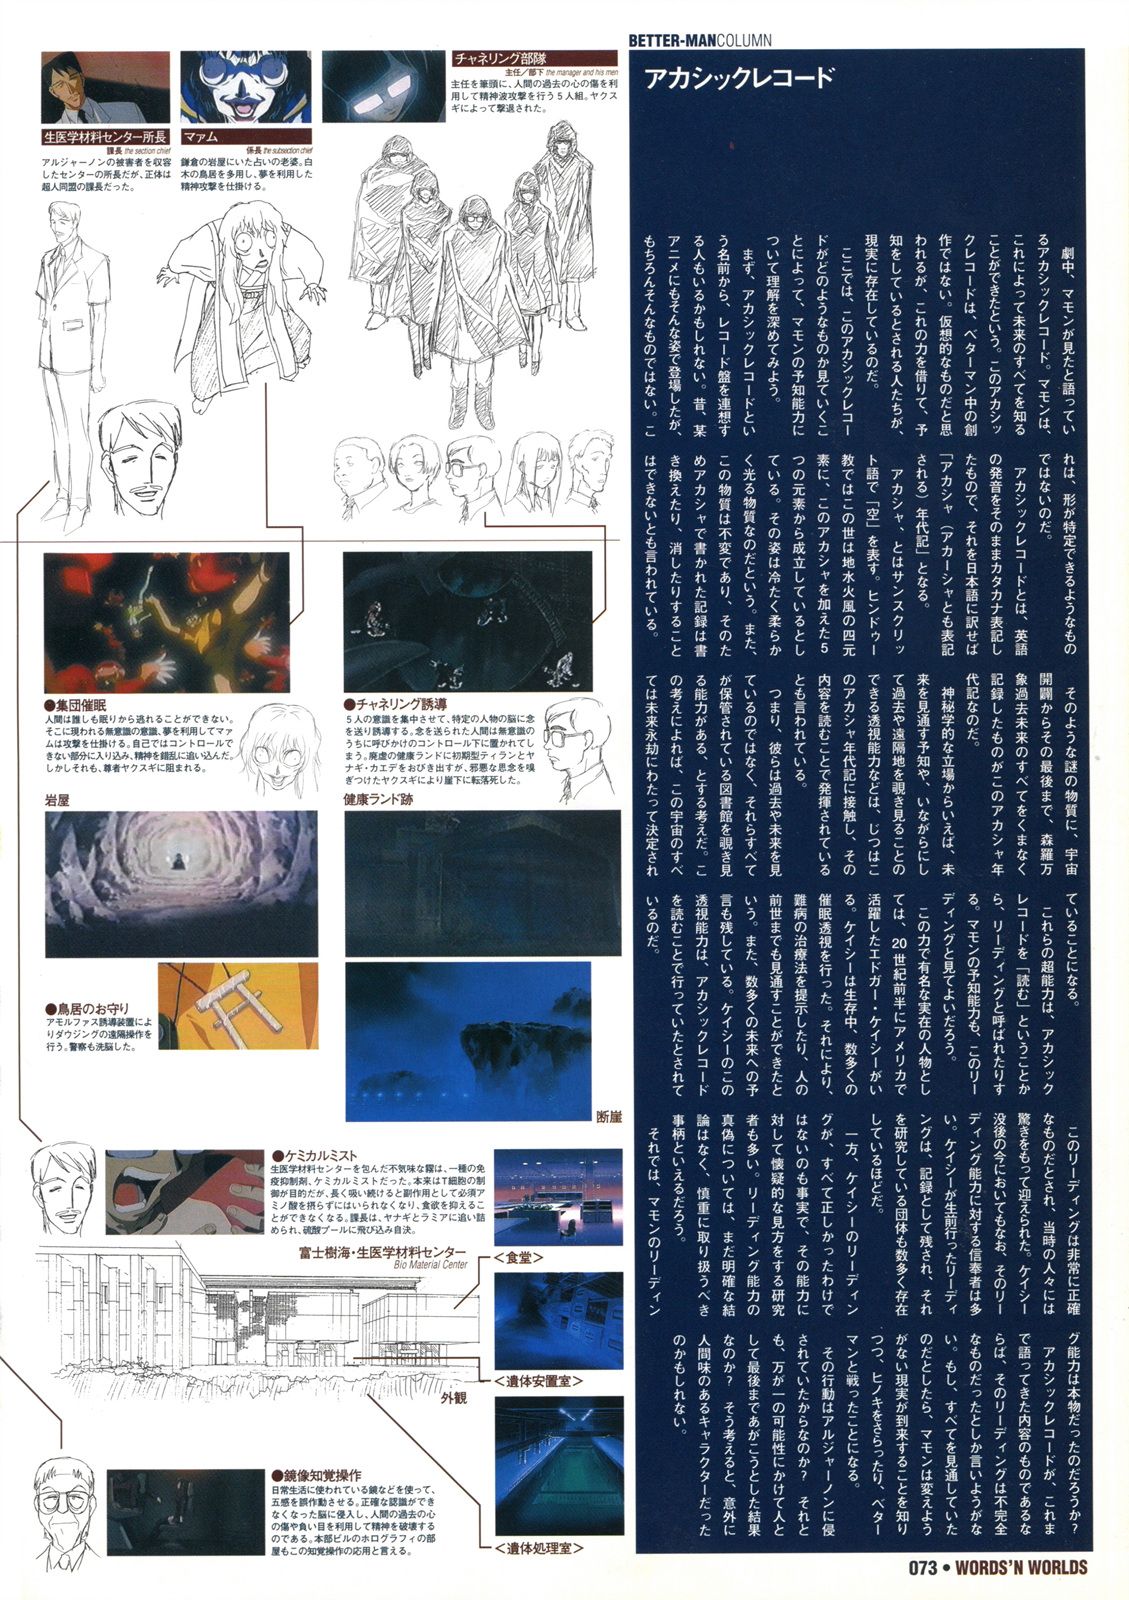 BETTERMAN COMPLETE BOOK 鑑-kagami- - 第02卷(2/3) - 3